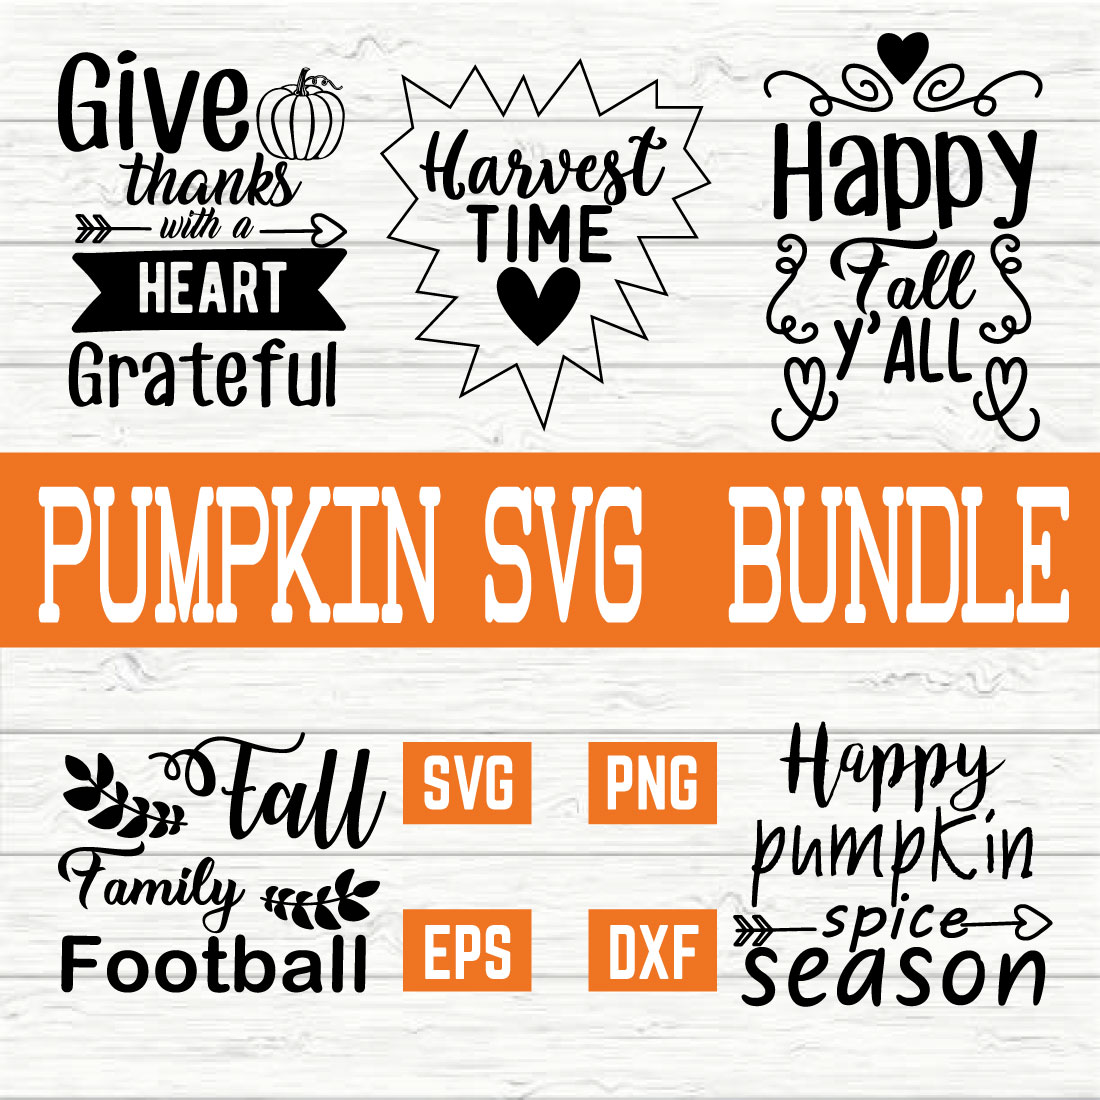 Pumpkin Svg Bundle vol 2 cover image.